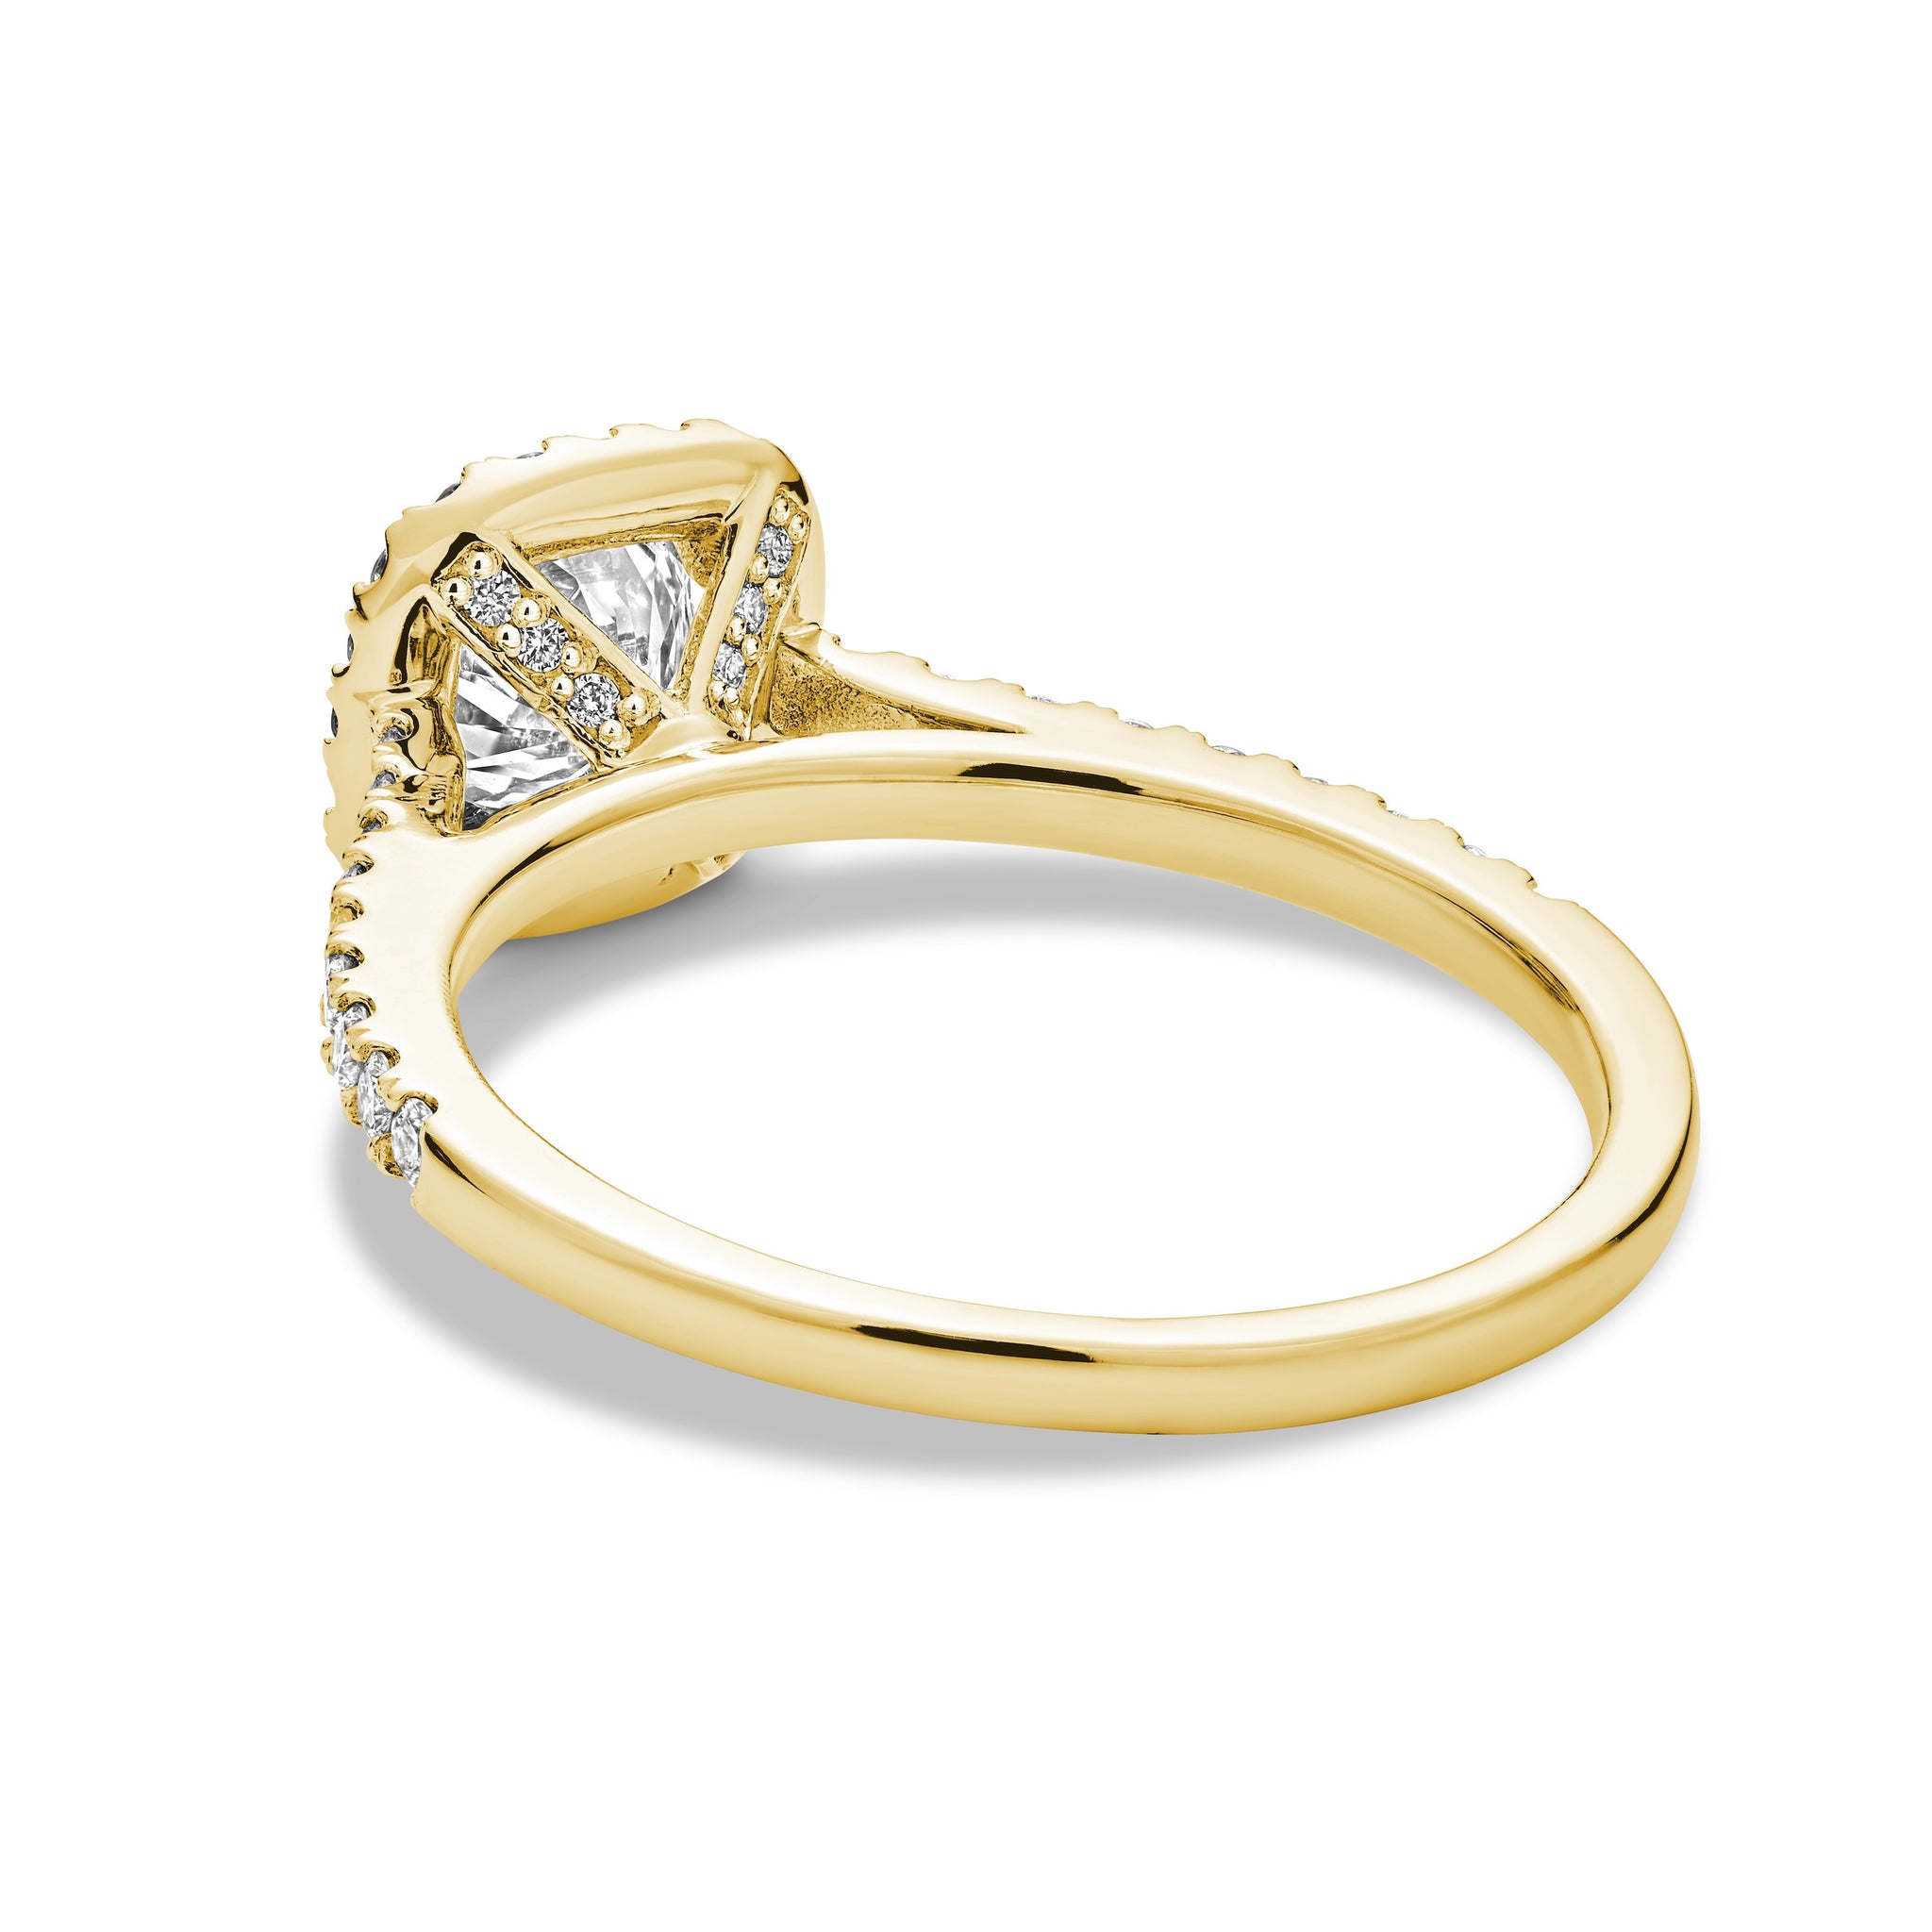 Hemsleys Collection 14K Round Diamond Cushion Halo Engagement Ring